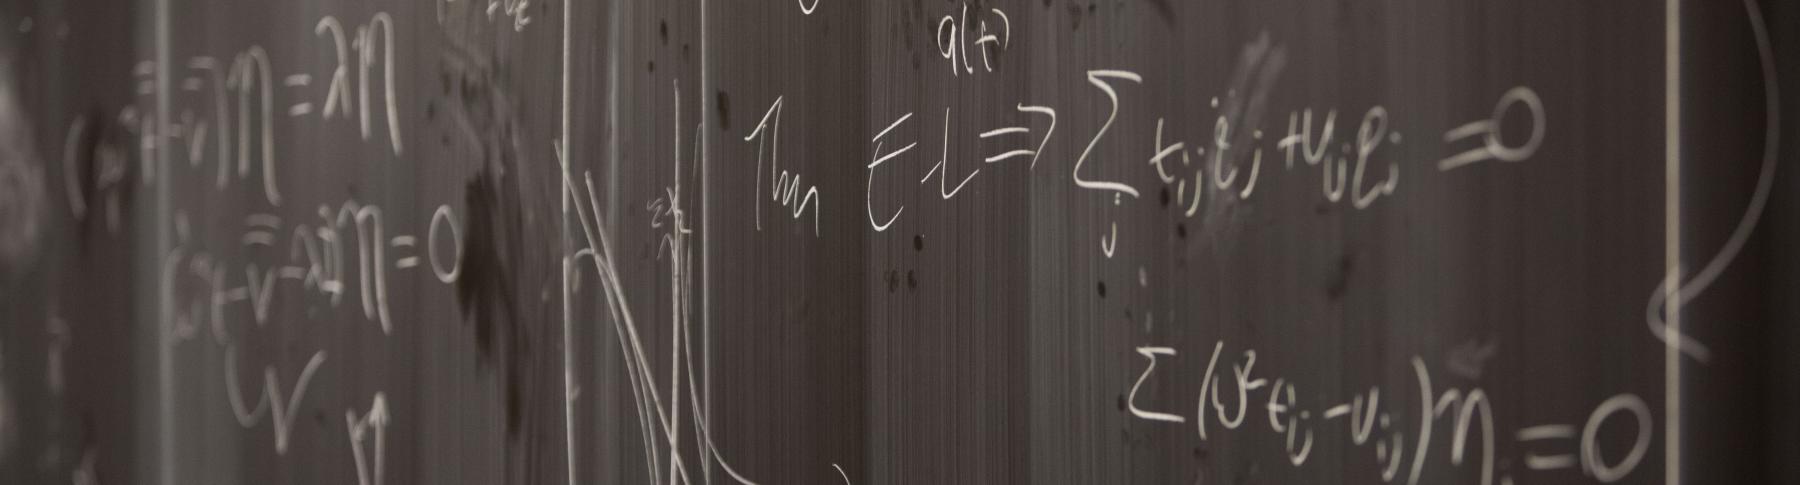 chalkboard equation